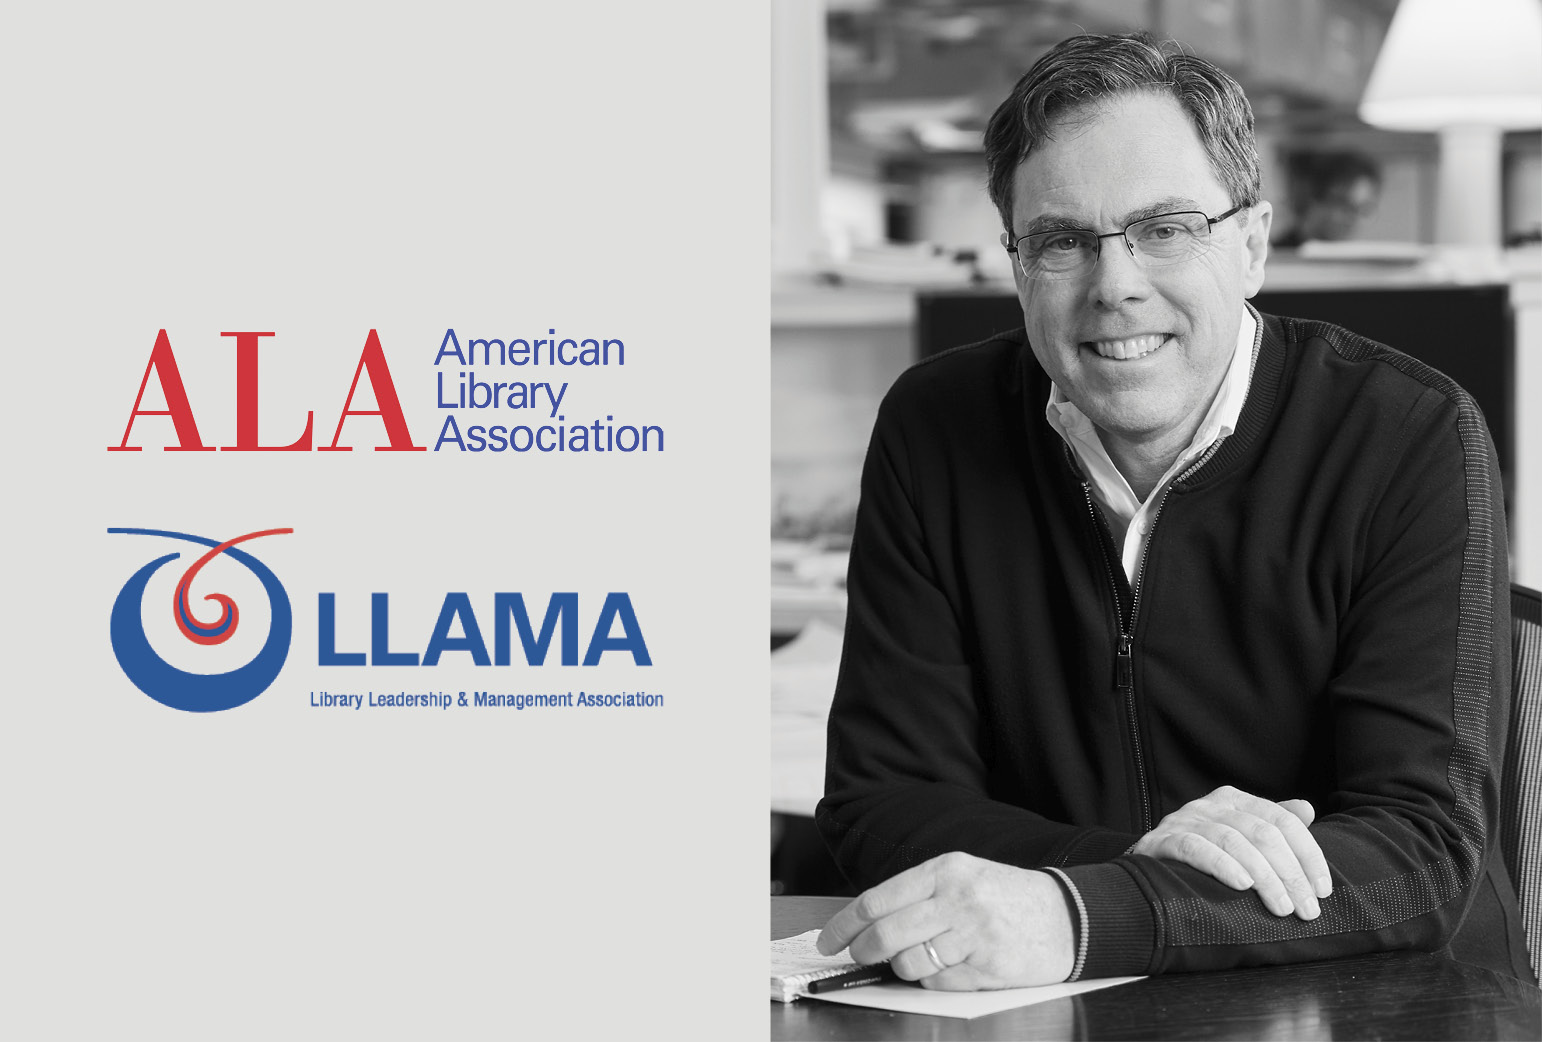 Alexander Lamis to Speak at LLAMA Workshop in Ohio